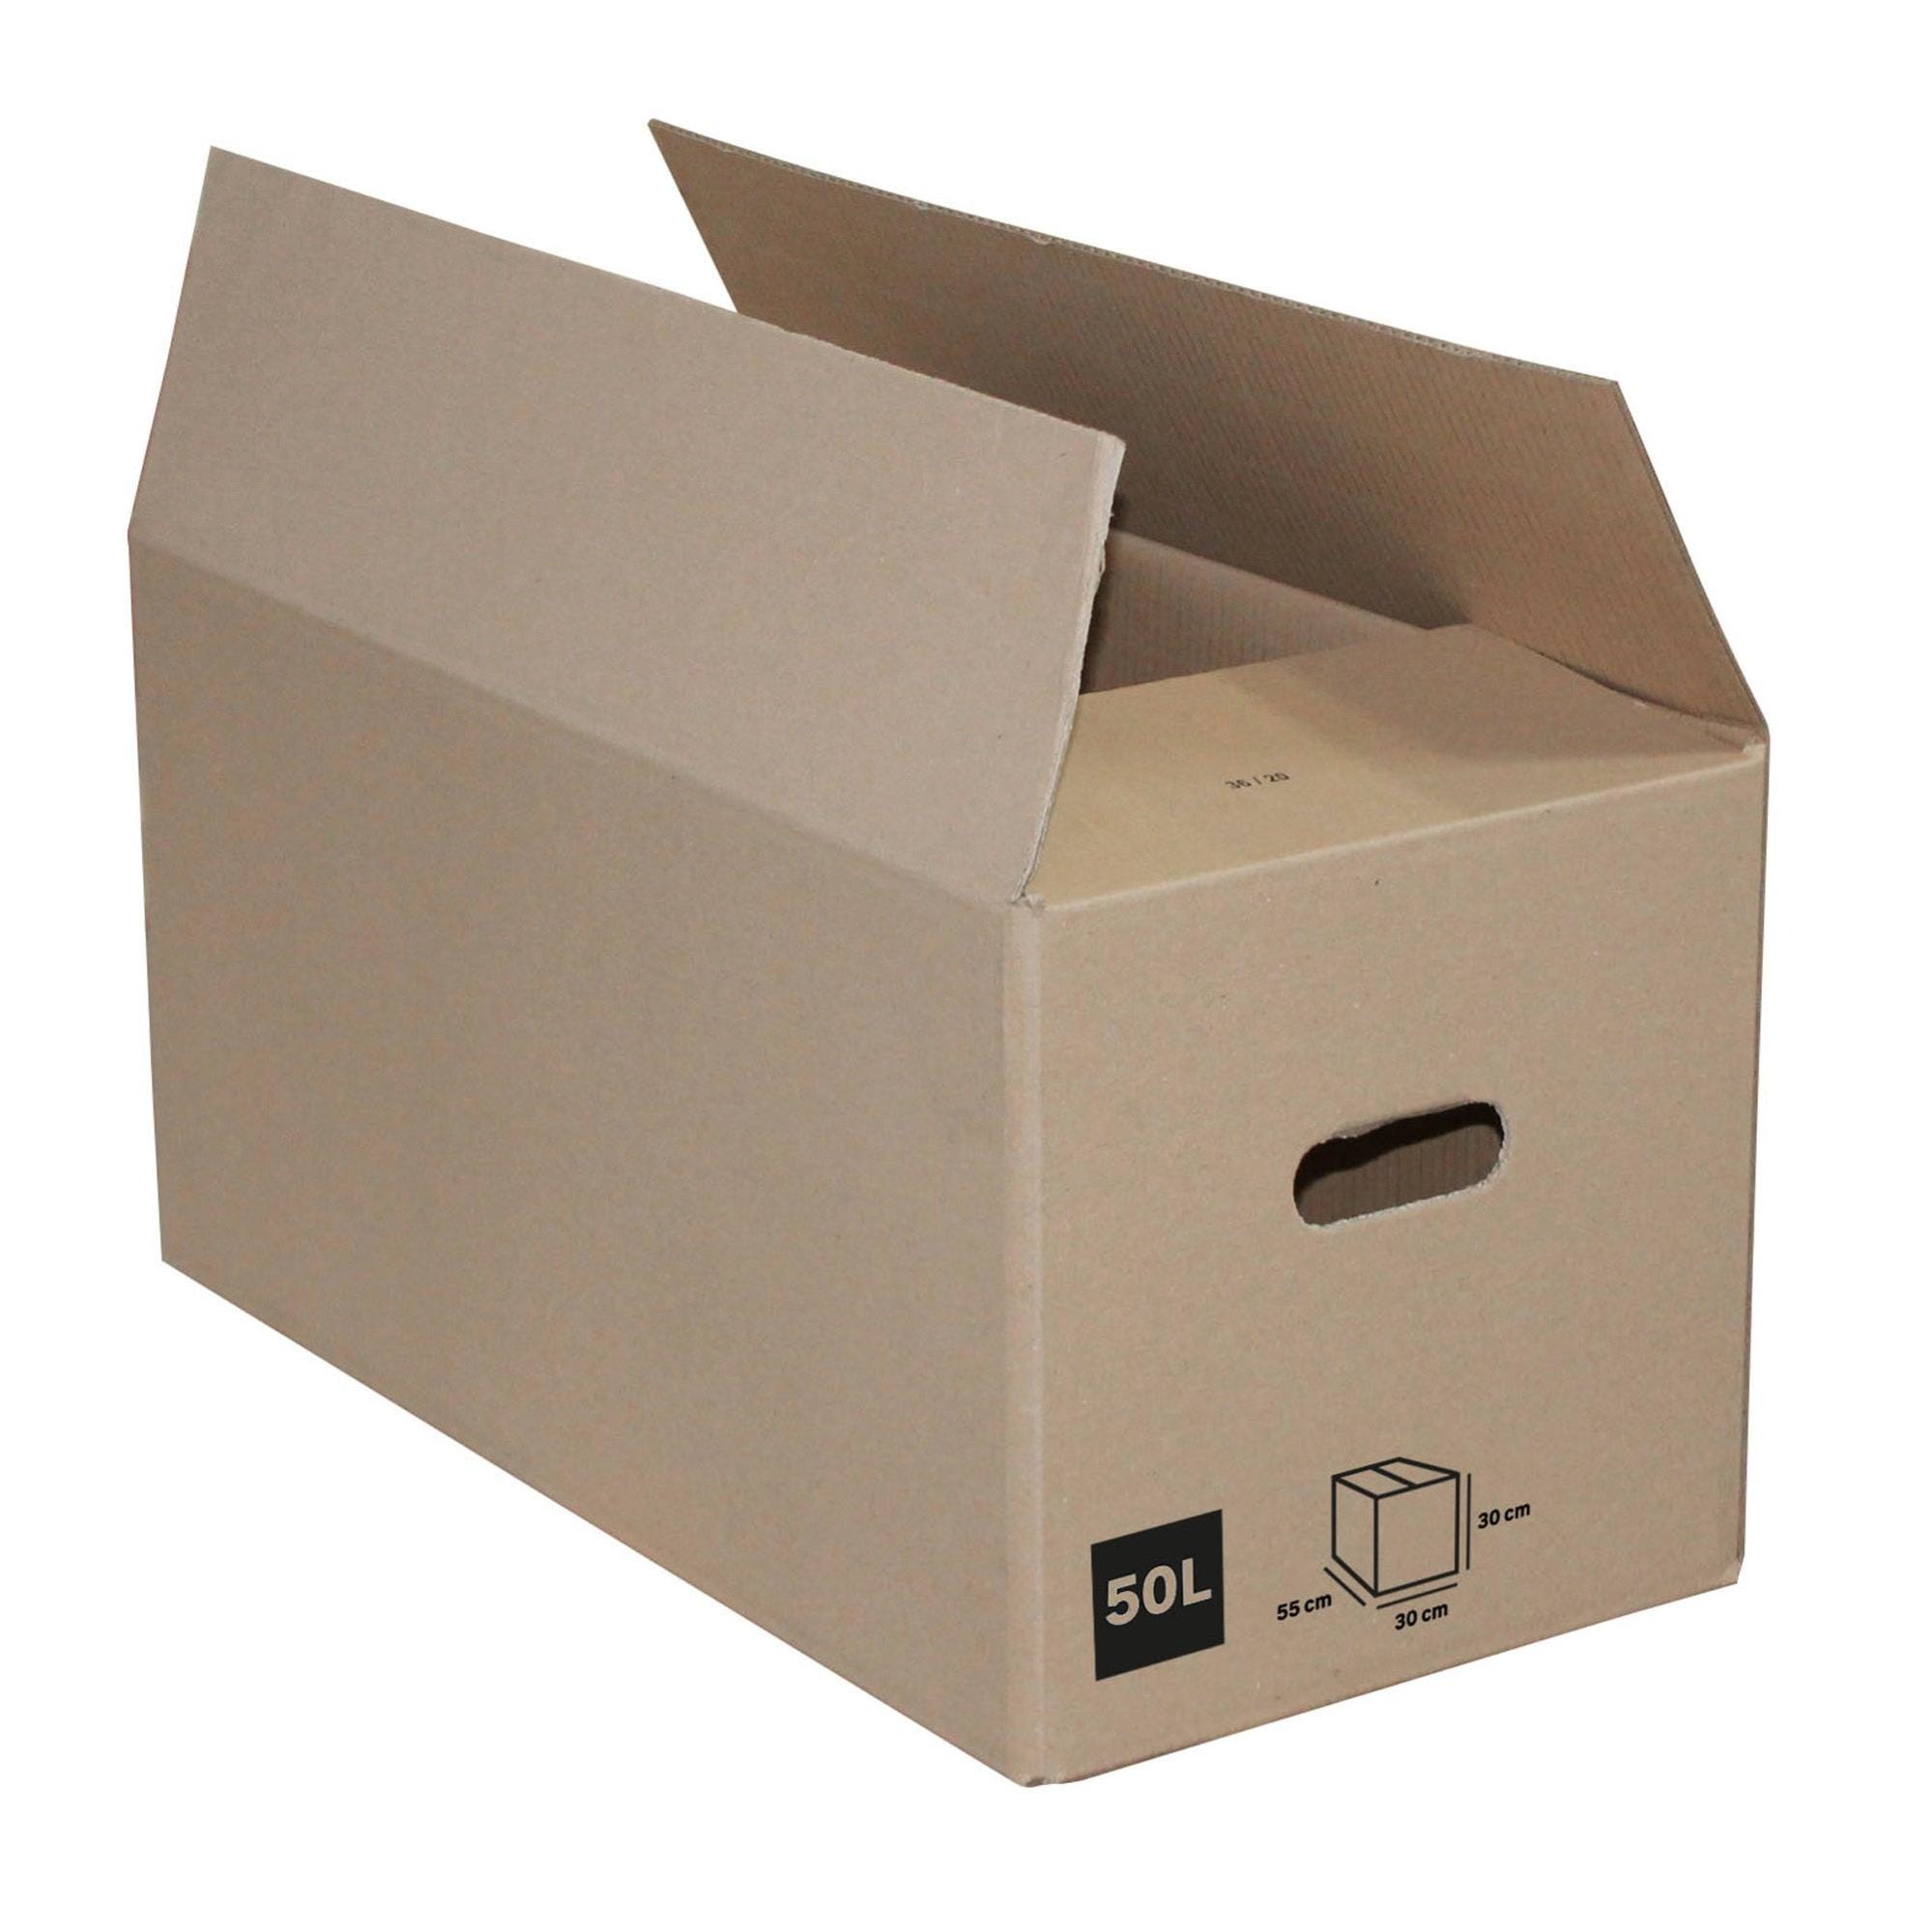 Comprar online - Pack 2 cajas plegables - Muy Mucho